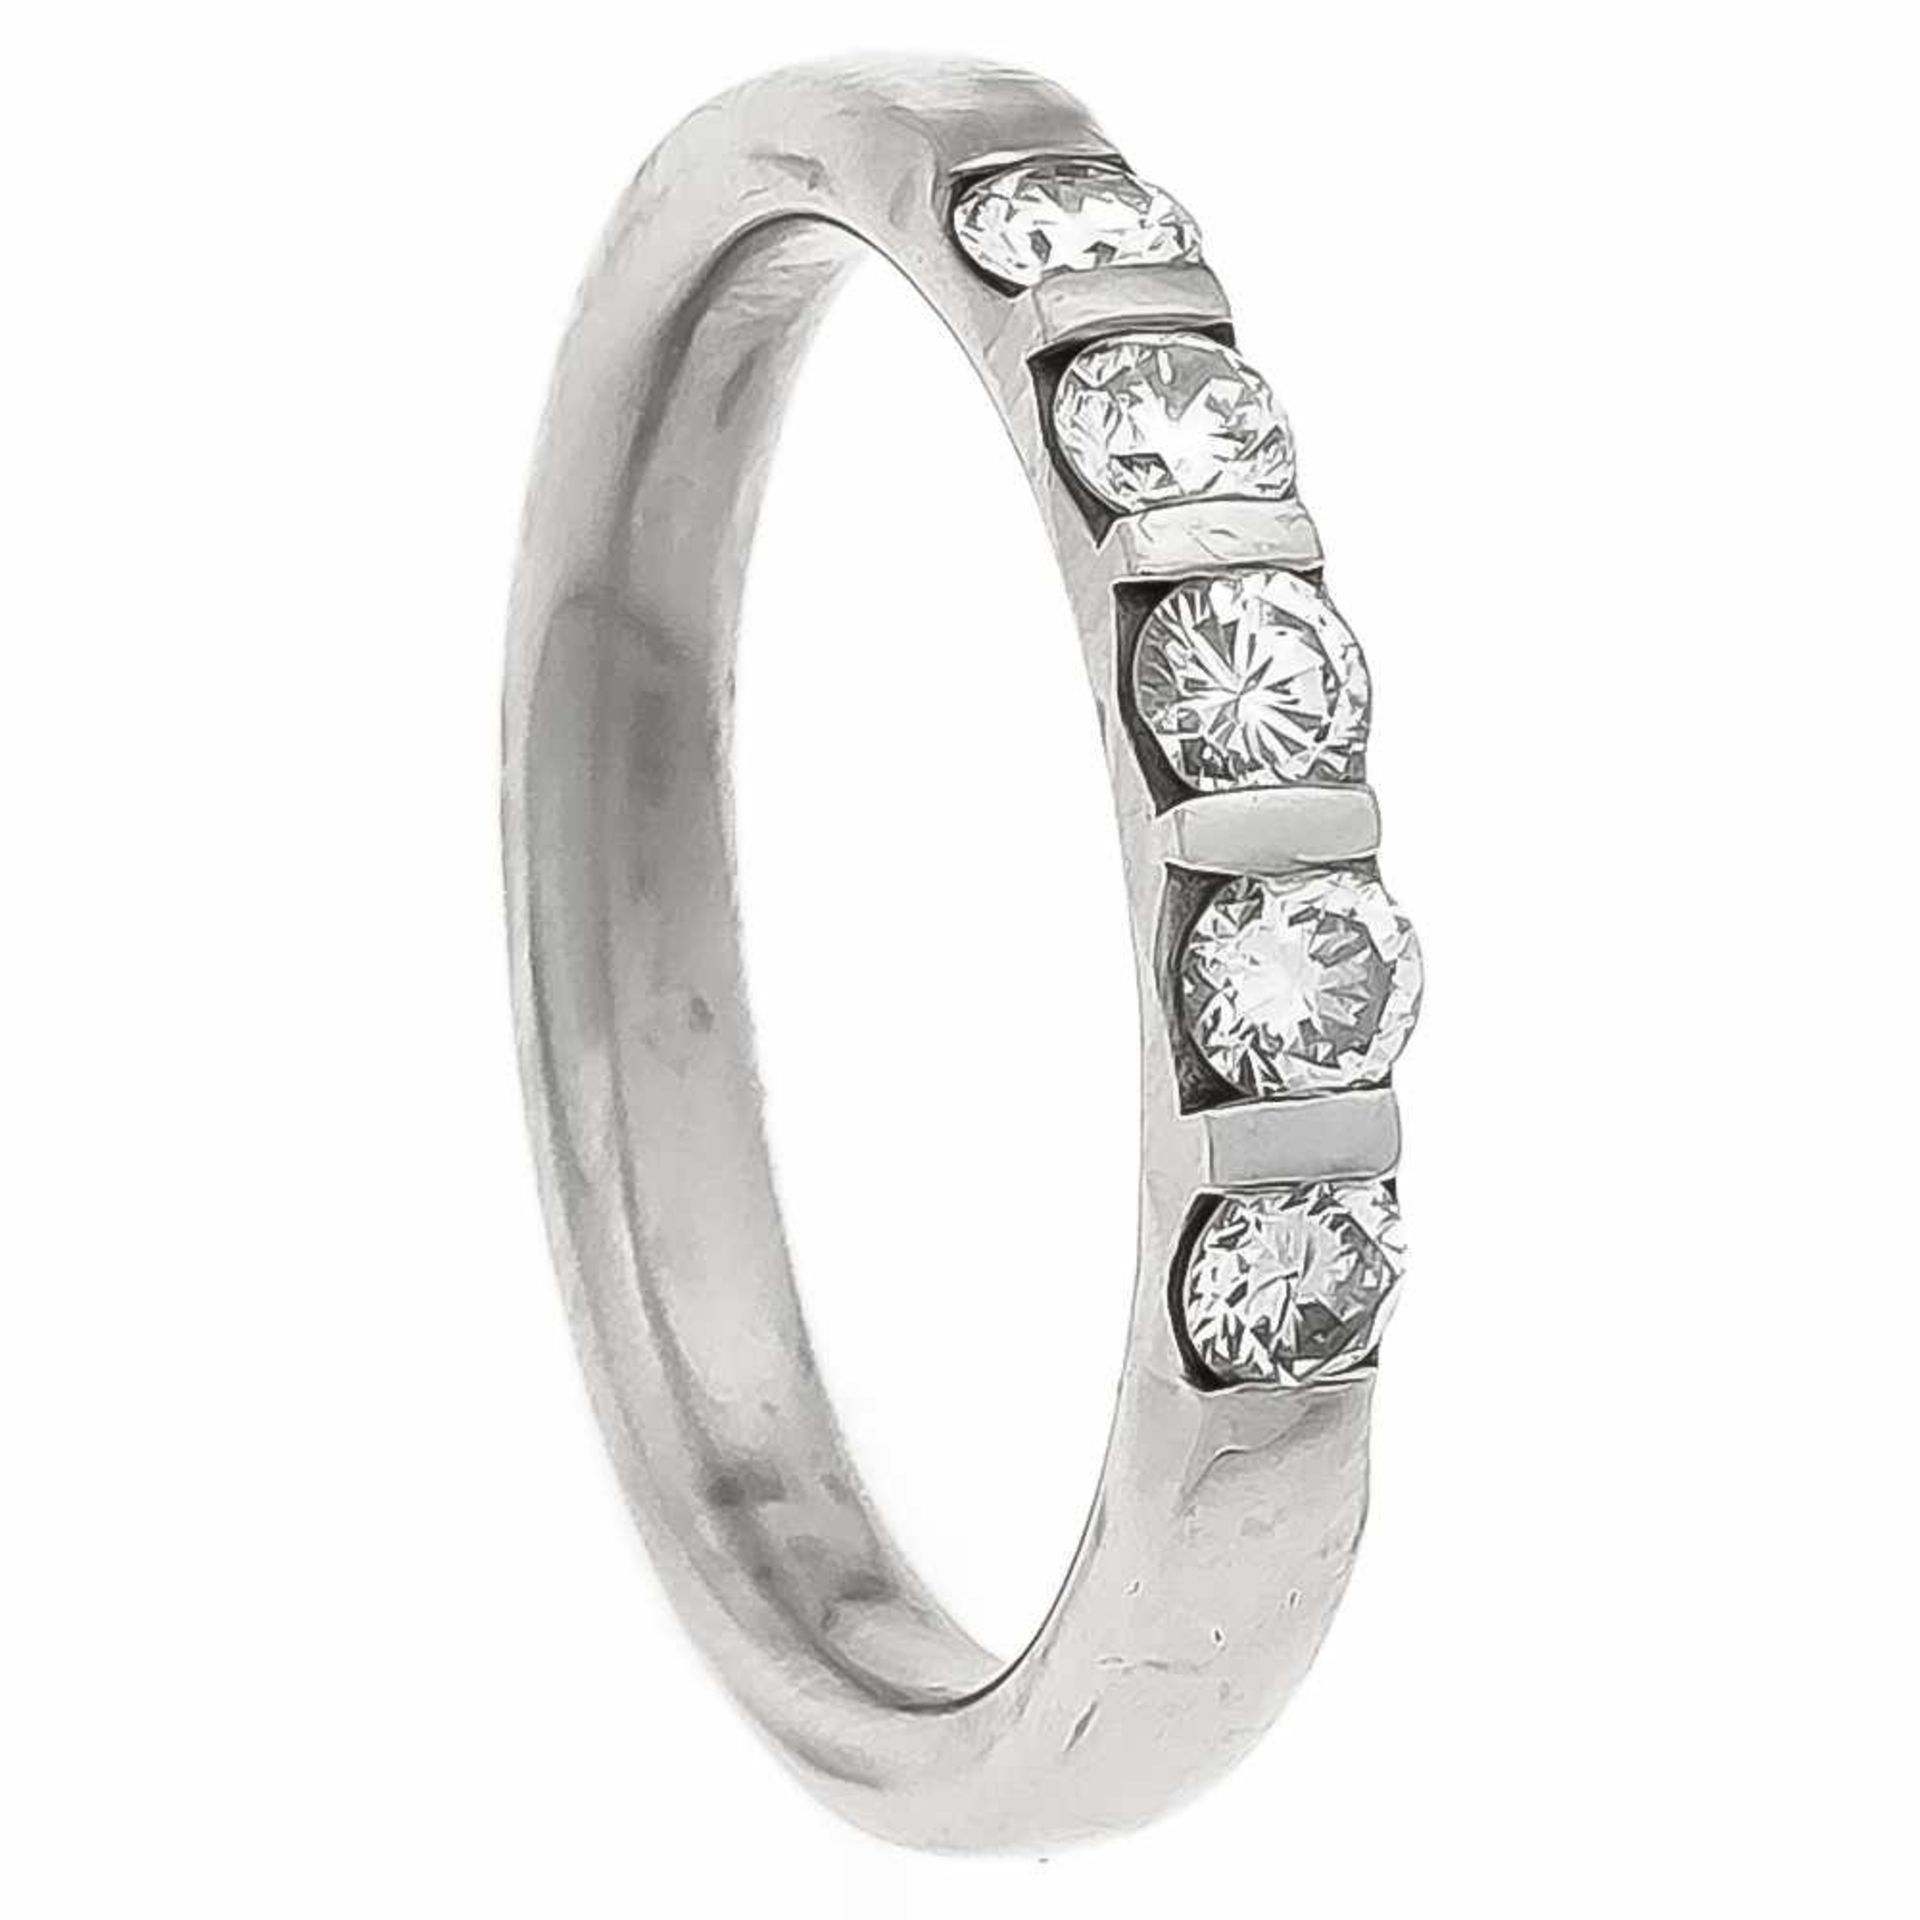 Brillant-Ring WG 585/000 mit 5 Brillanten, zus. 0,42 ct W/SI, RG 59, 5,0 gBrillant ring WG 585/000